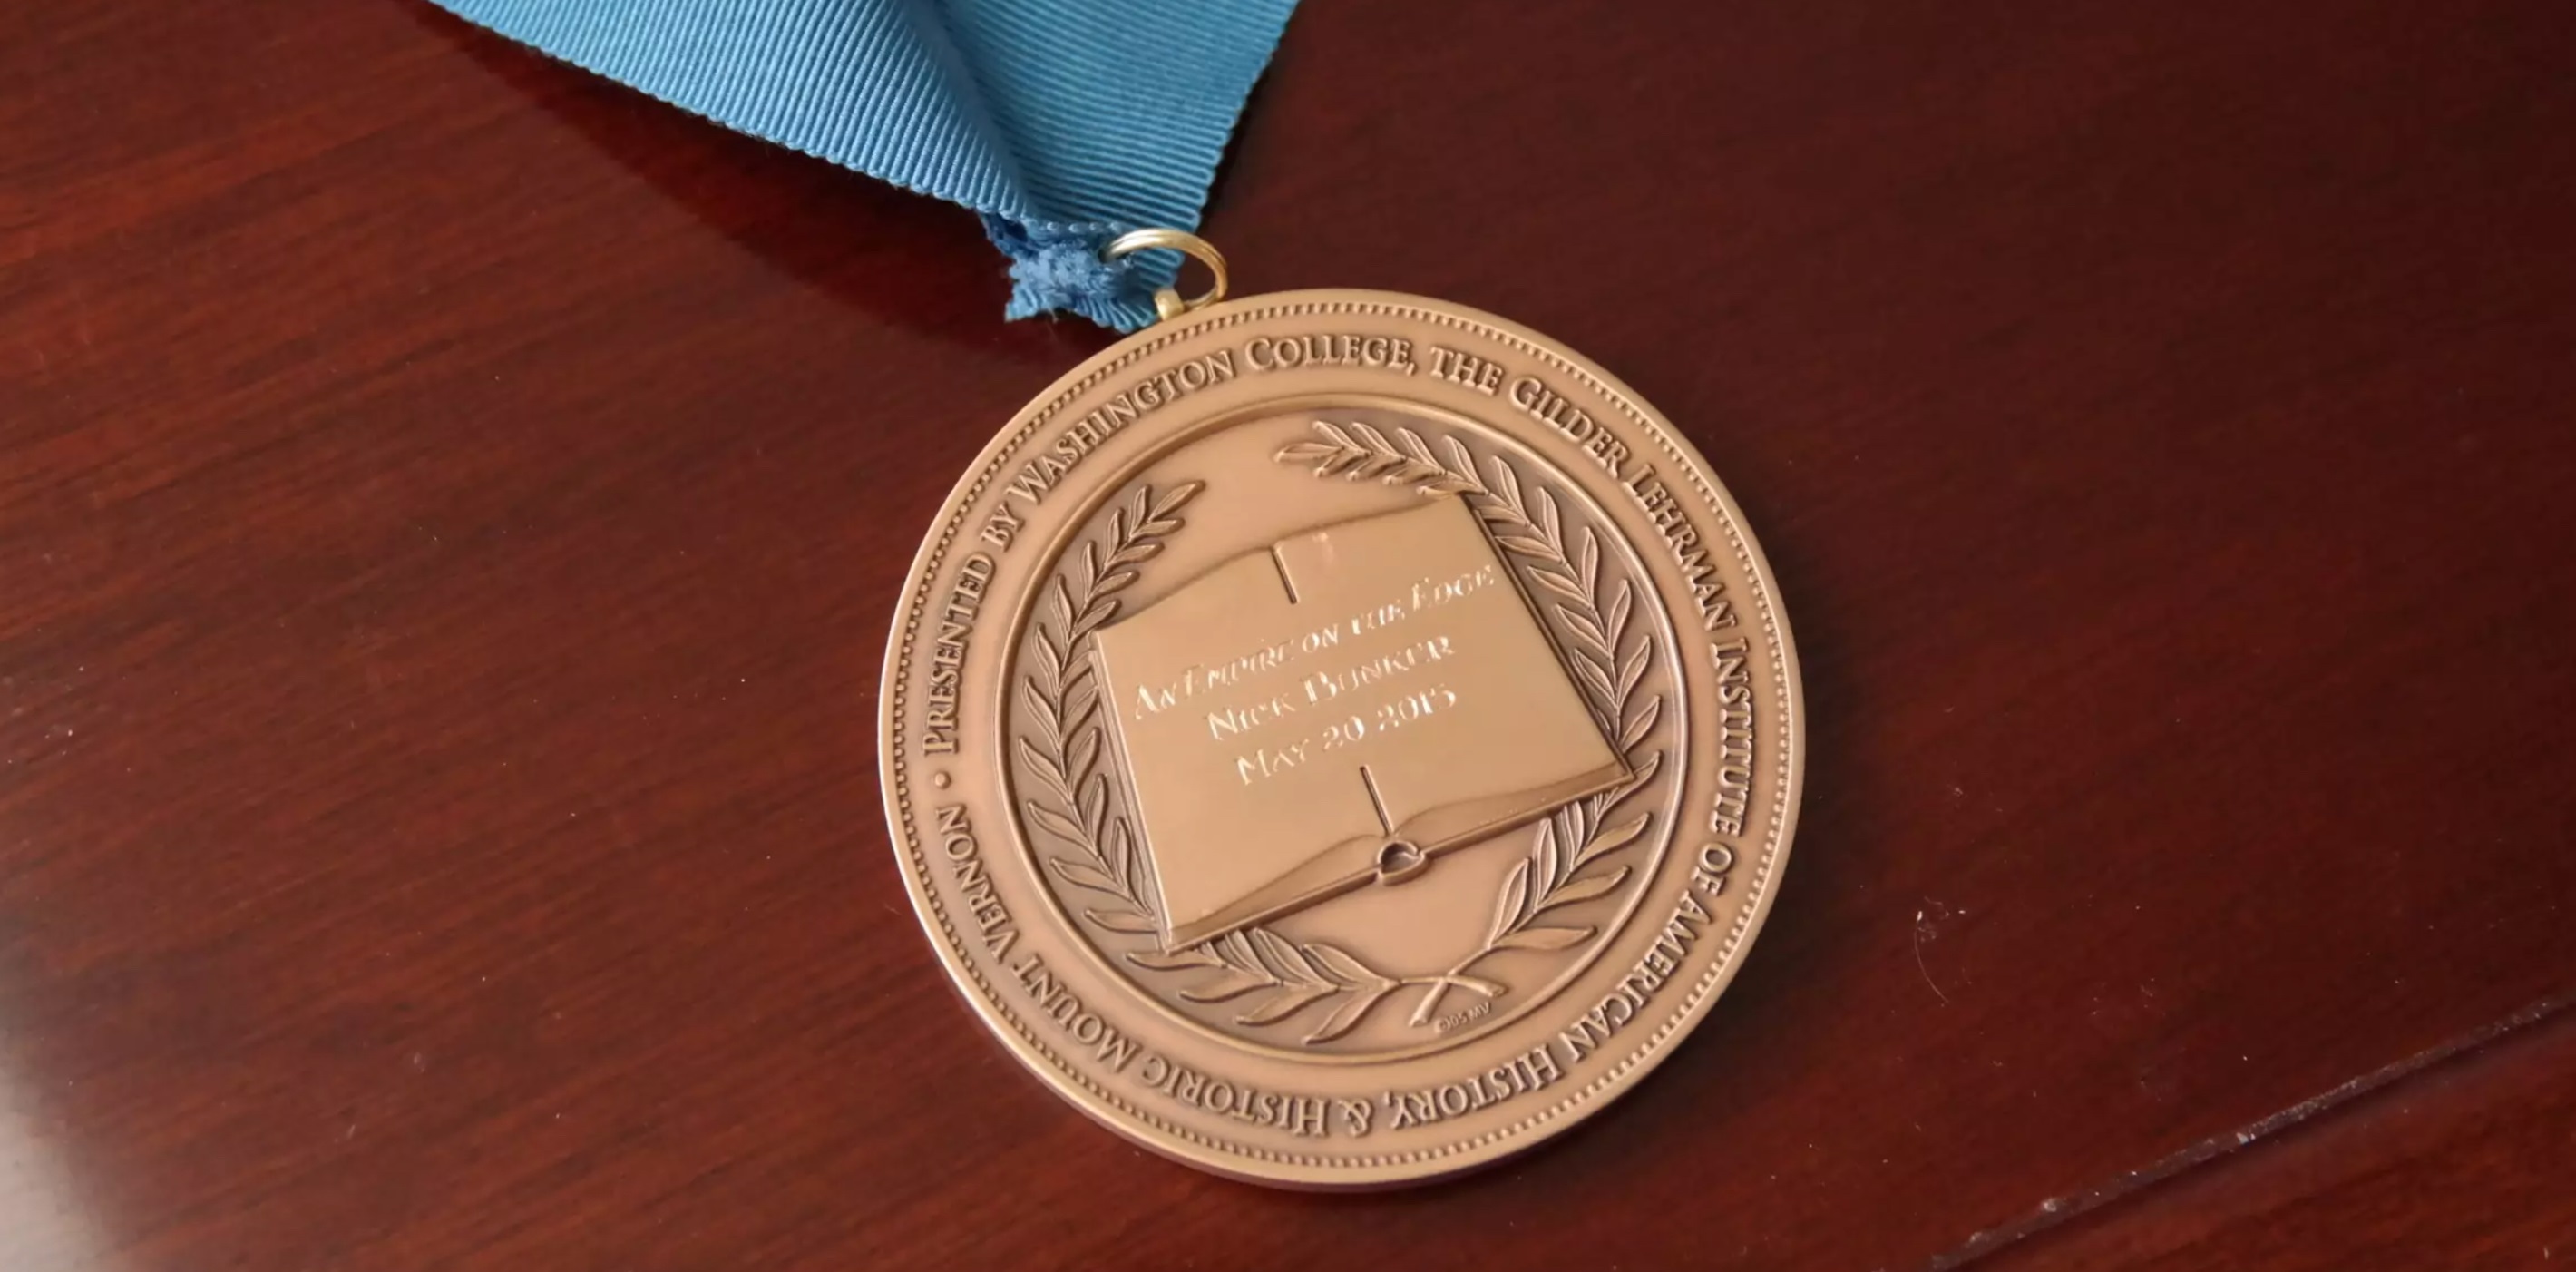 the Washington Prize medal